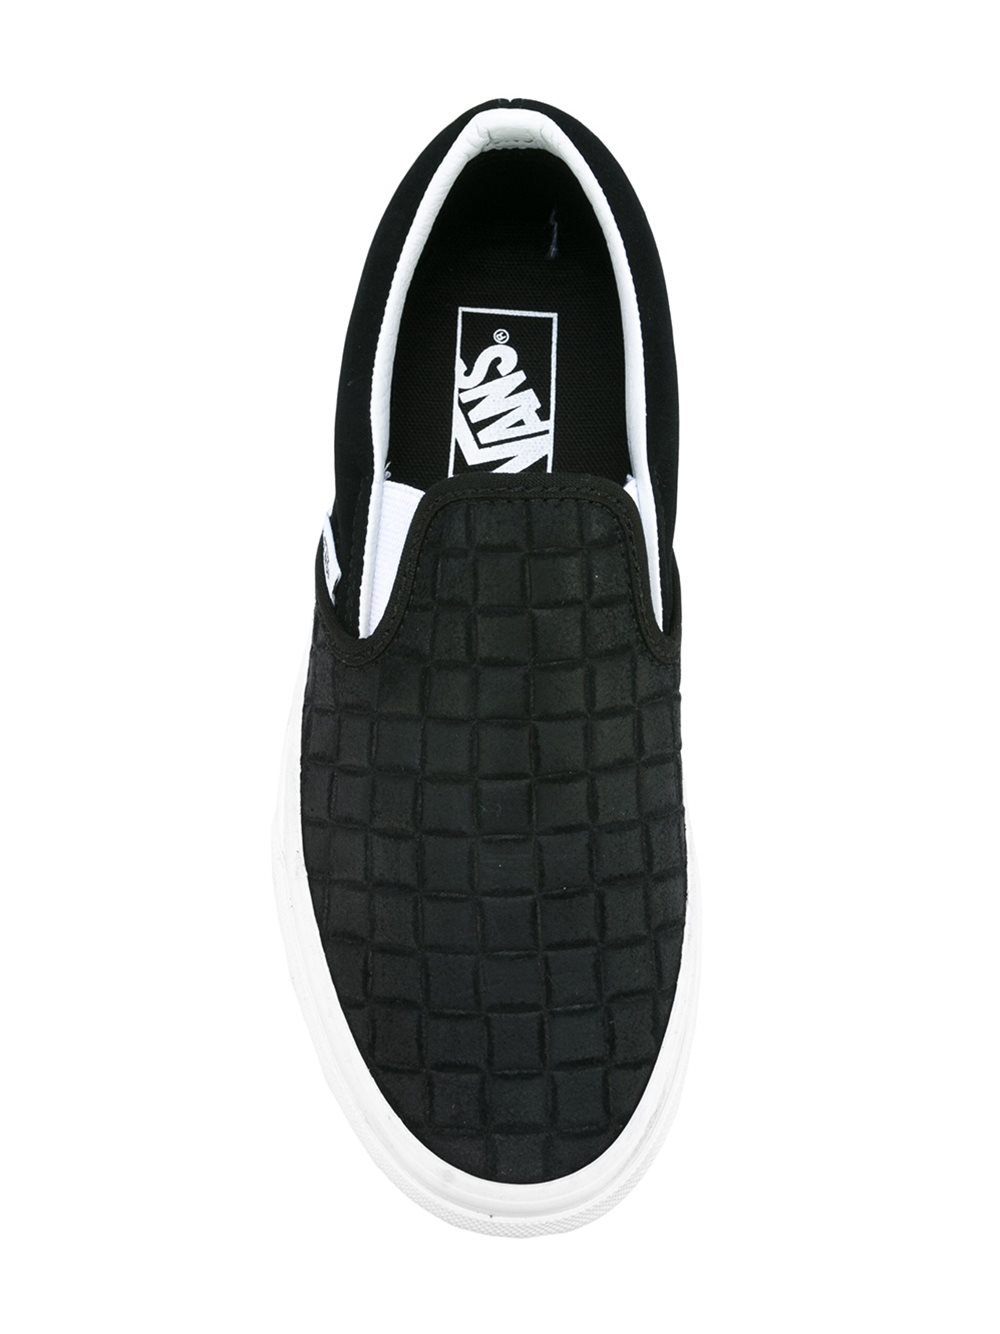 Lyst - Vans Square Embossed Slip-on Sneakers in Black for Men